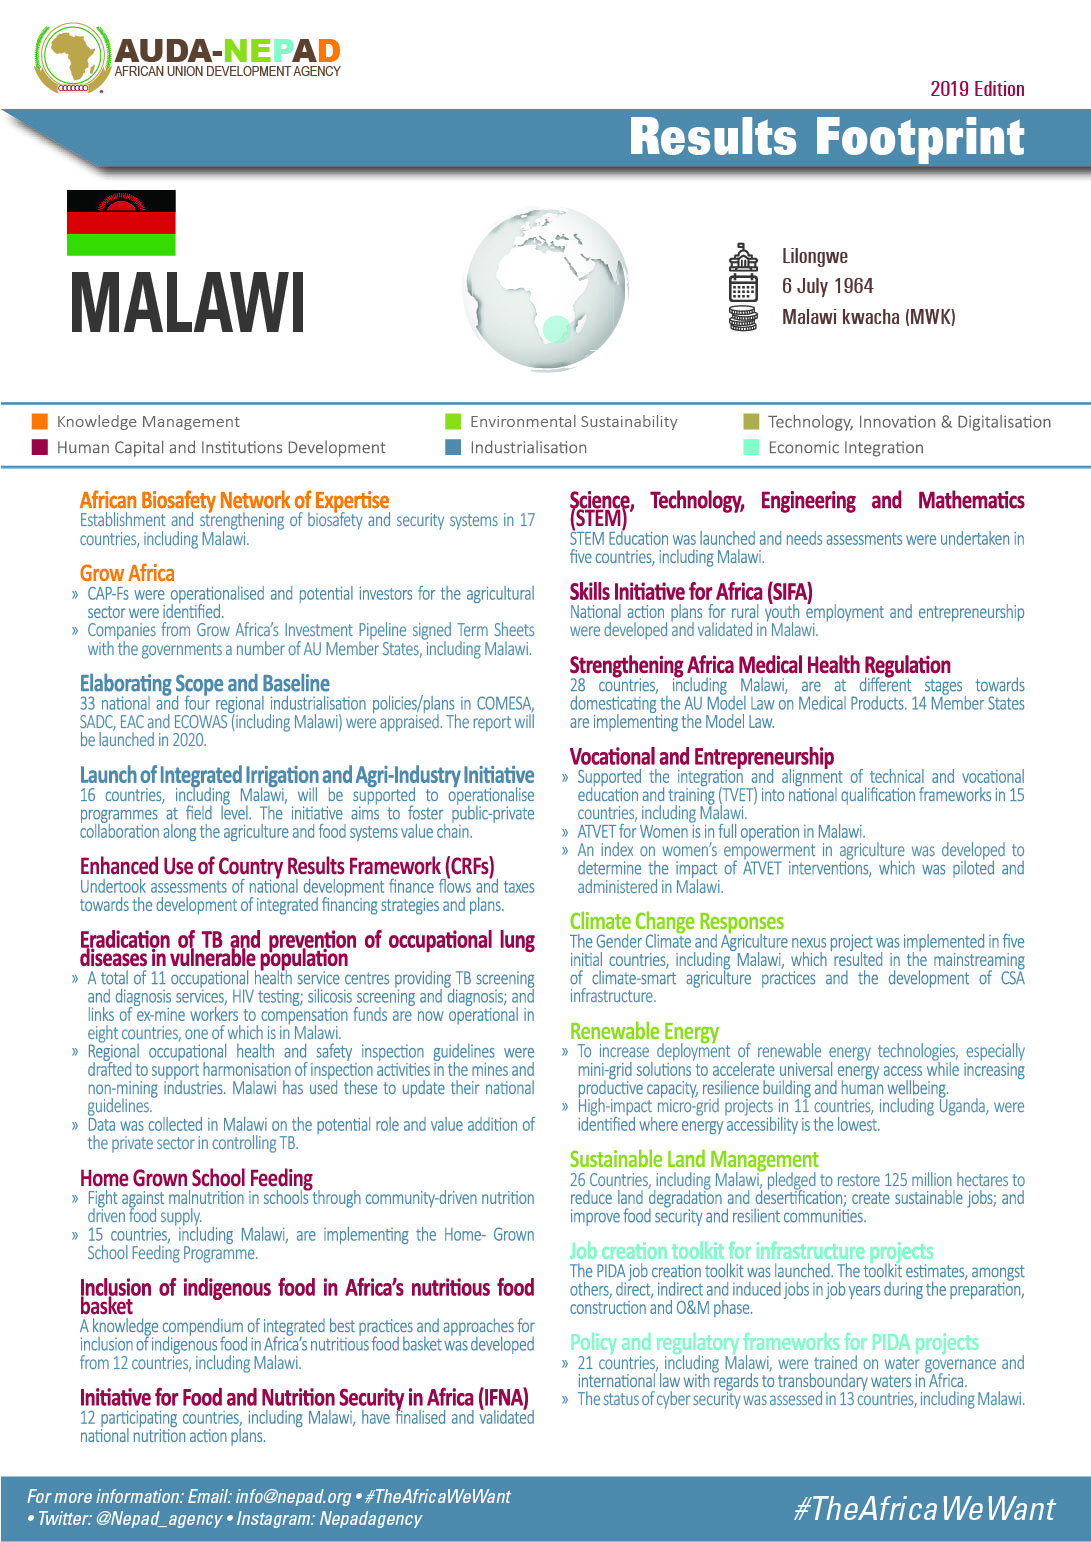 2019 AUDA-NEPAD Footprint: Country Profiles: Malawi